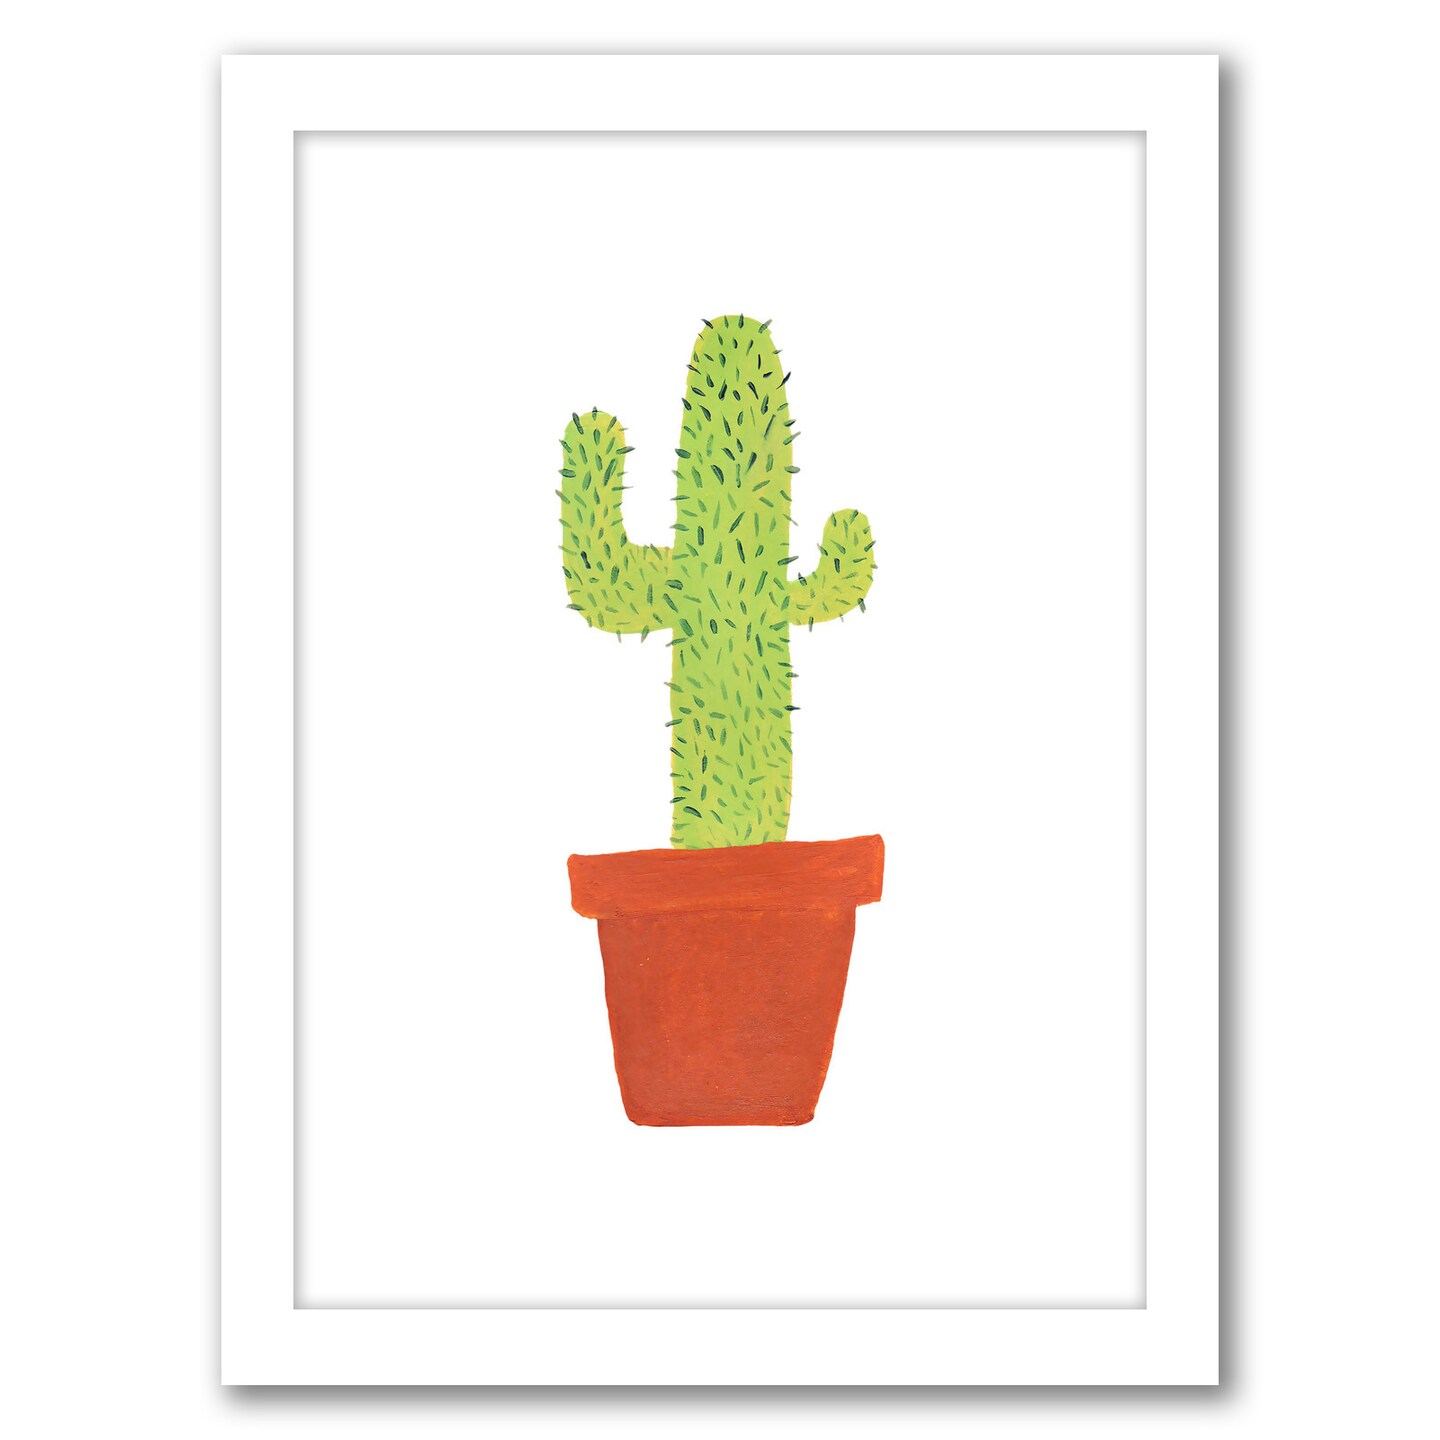 Gouache Cactus B by Samantha Ranlet Frame 